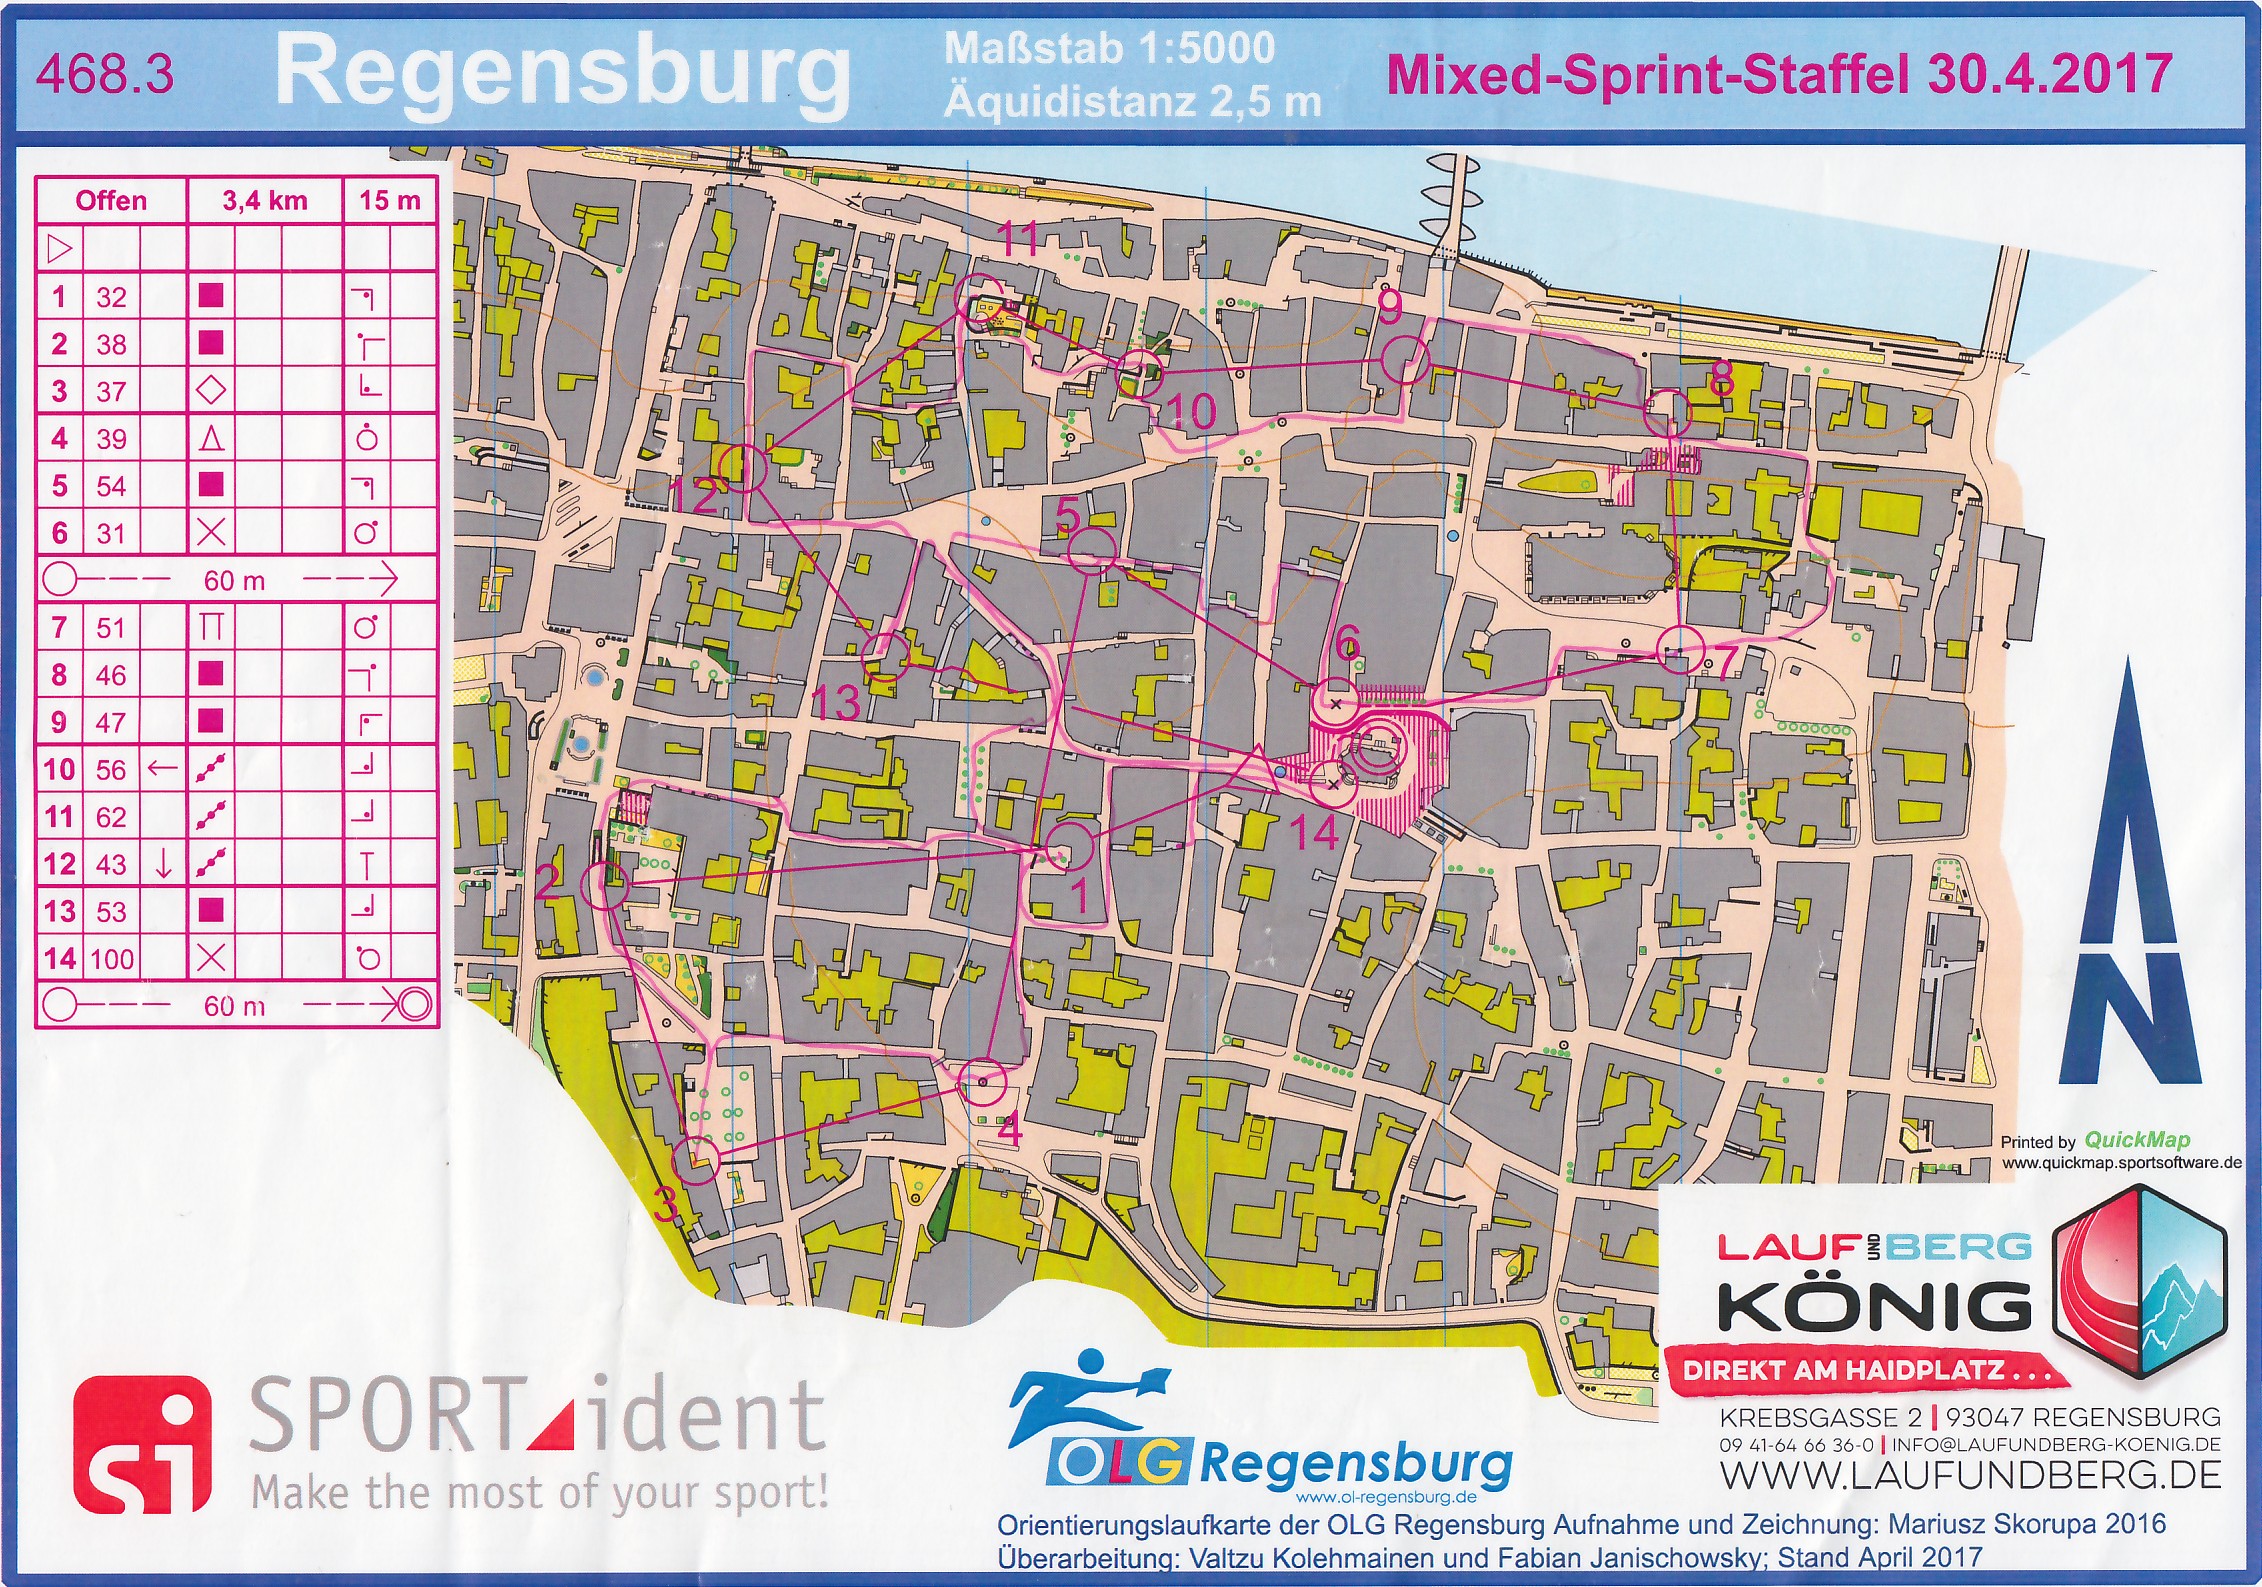 Sprint-Staffel in Regensburg (30/04/2017)